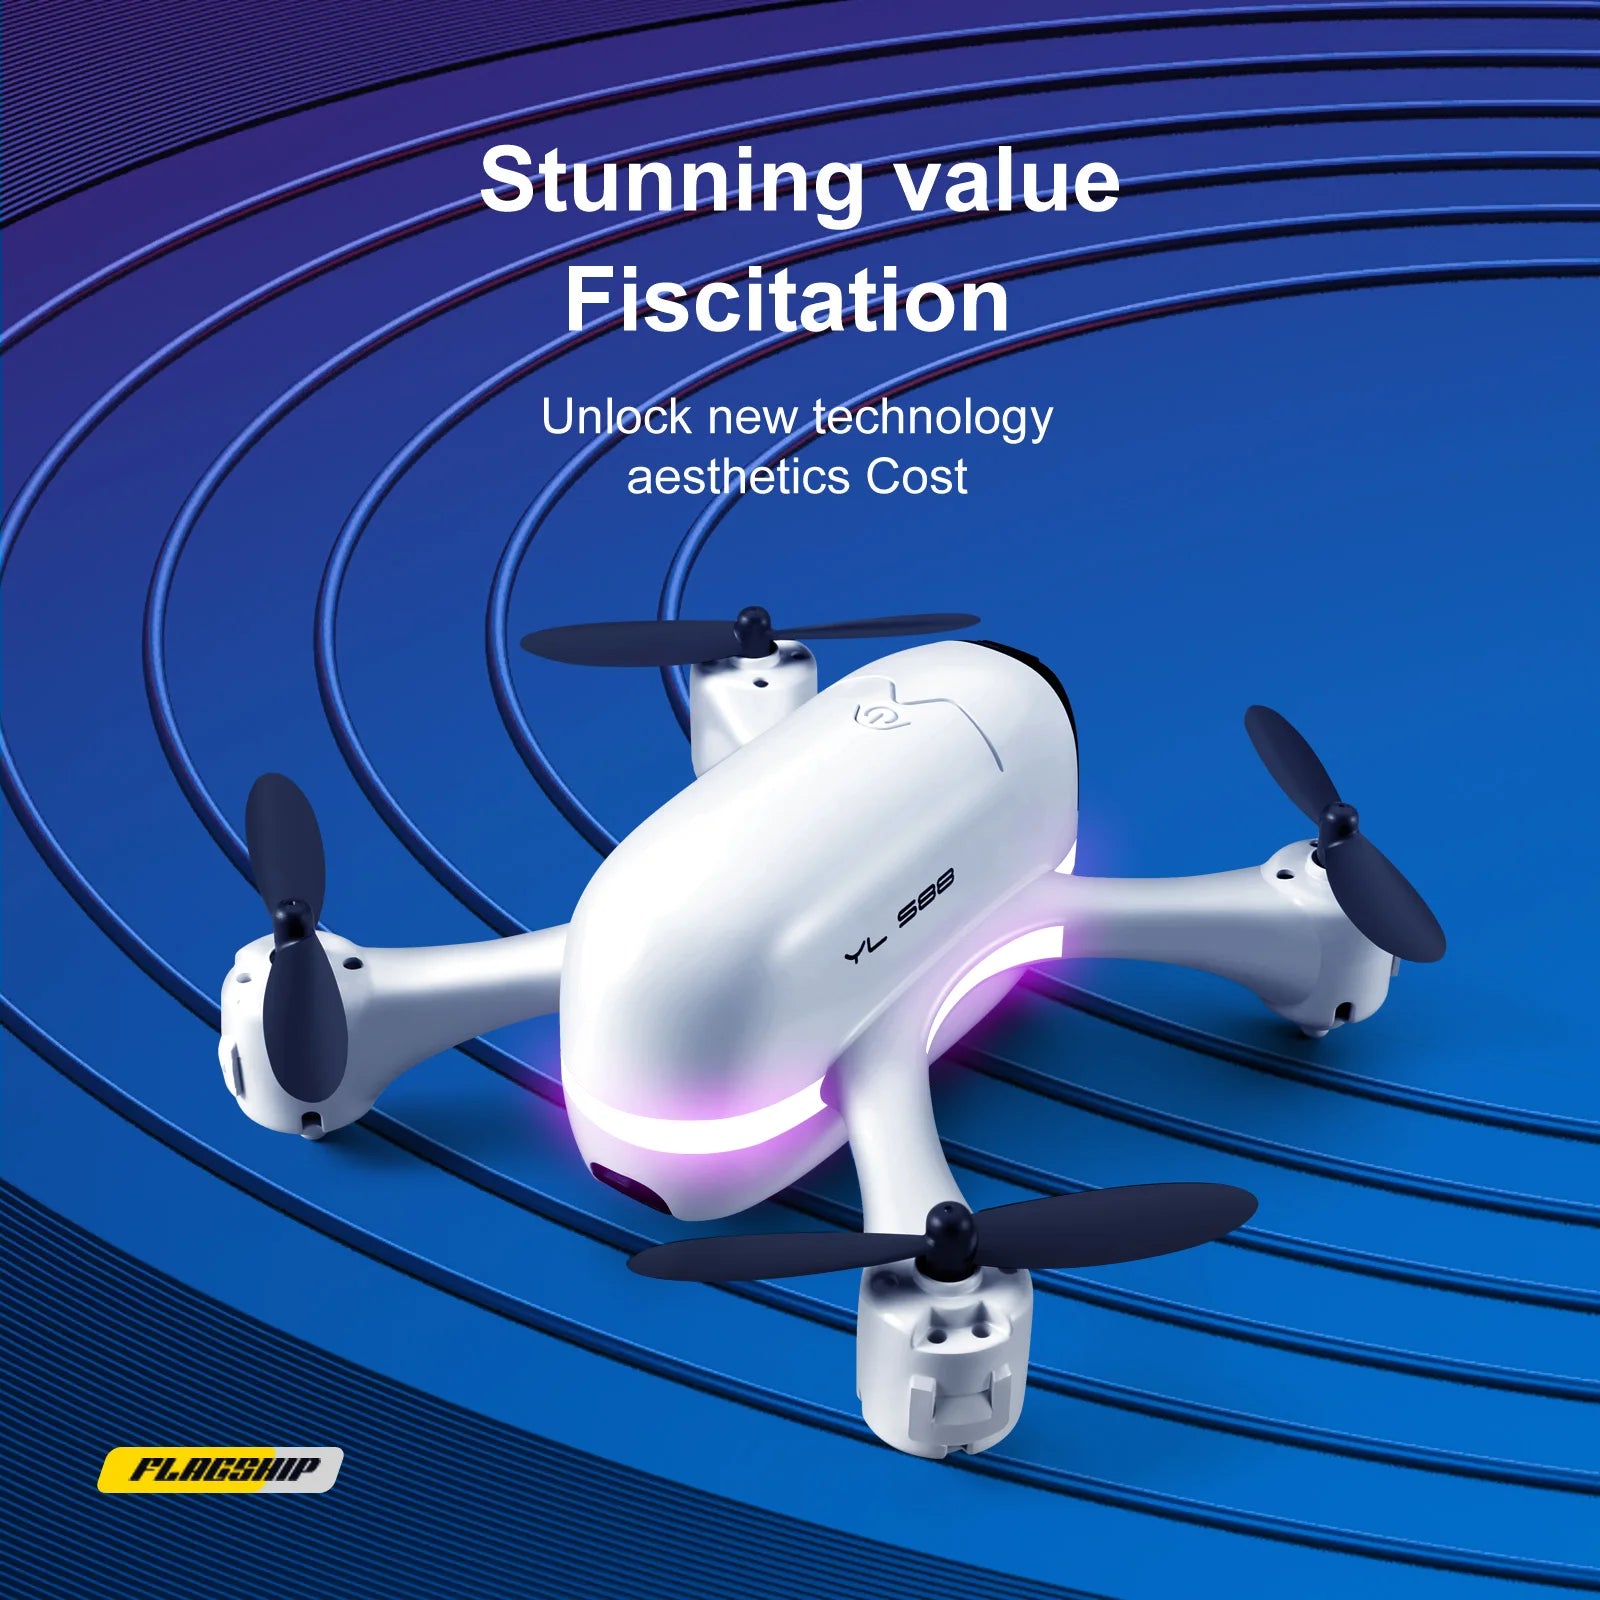 S88 Drone, stunning value fiscitation unlock new technology aesthetics cost 4 flae